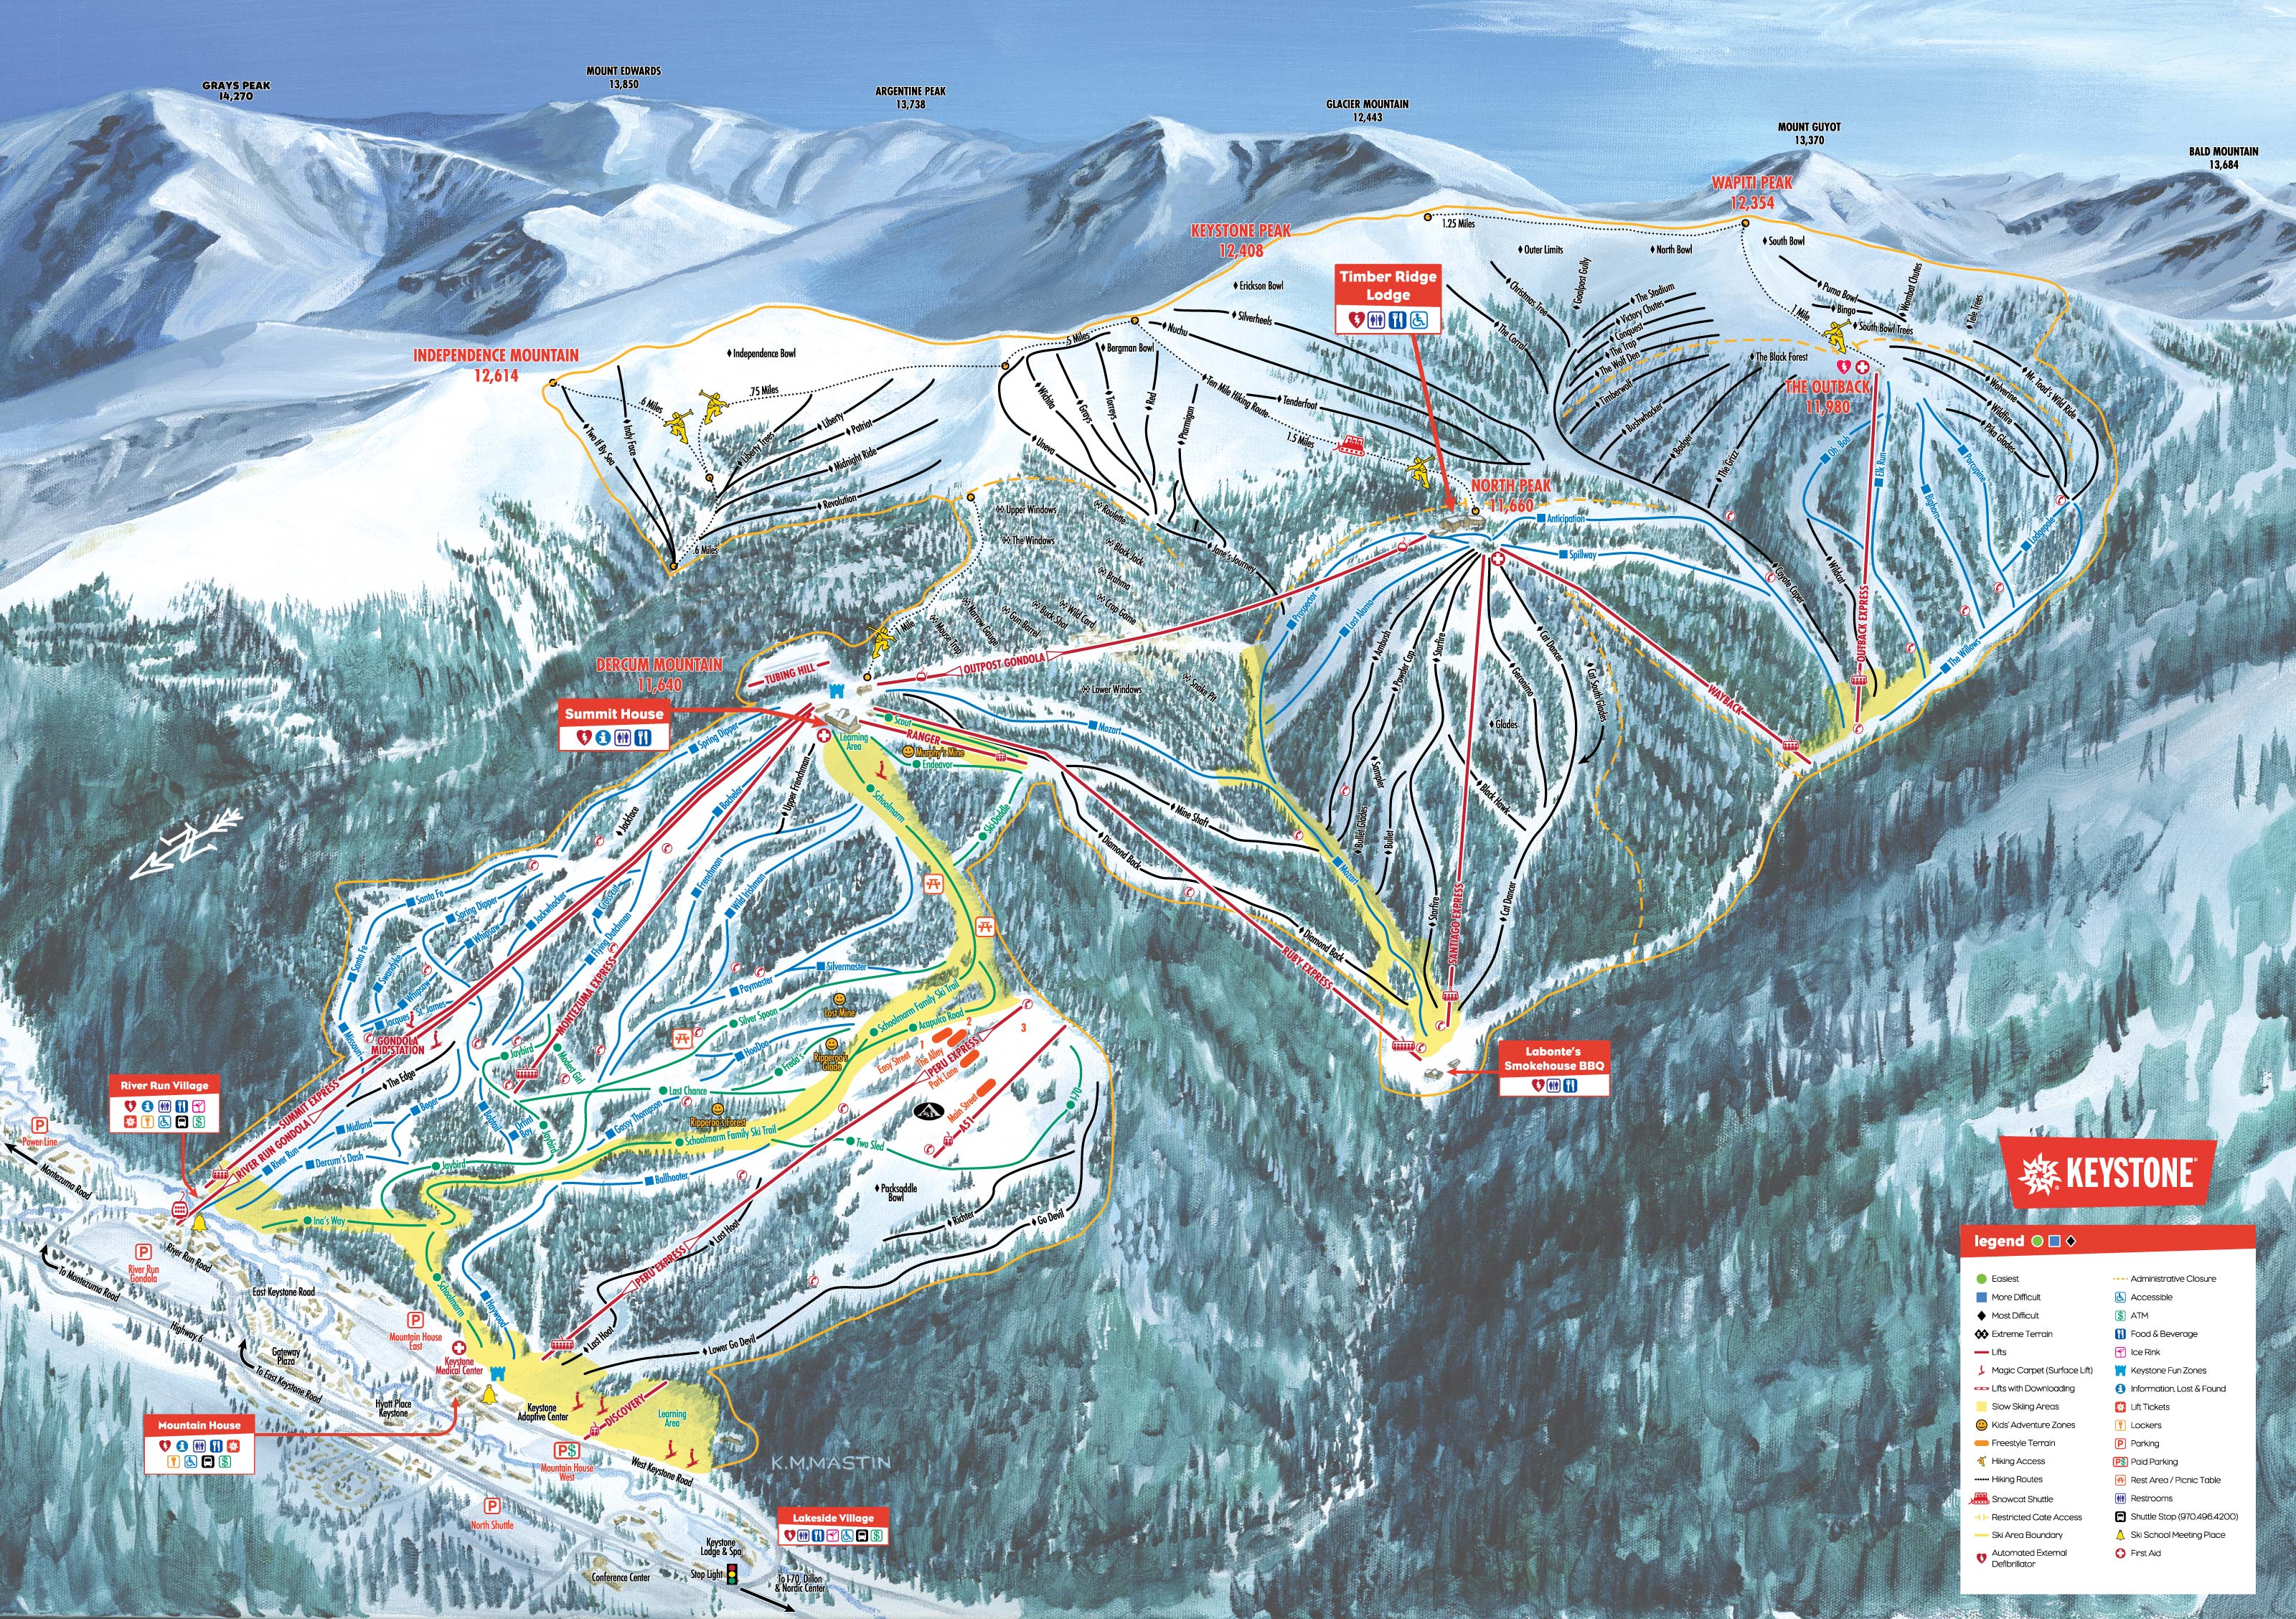 Keystone Ski Resort Guide